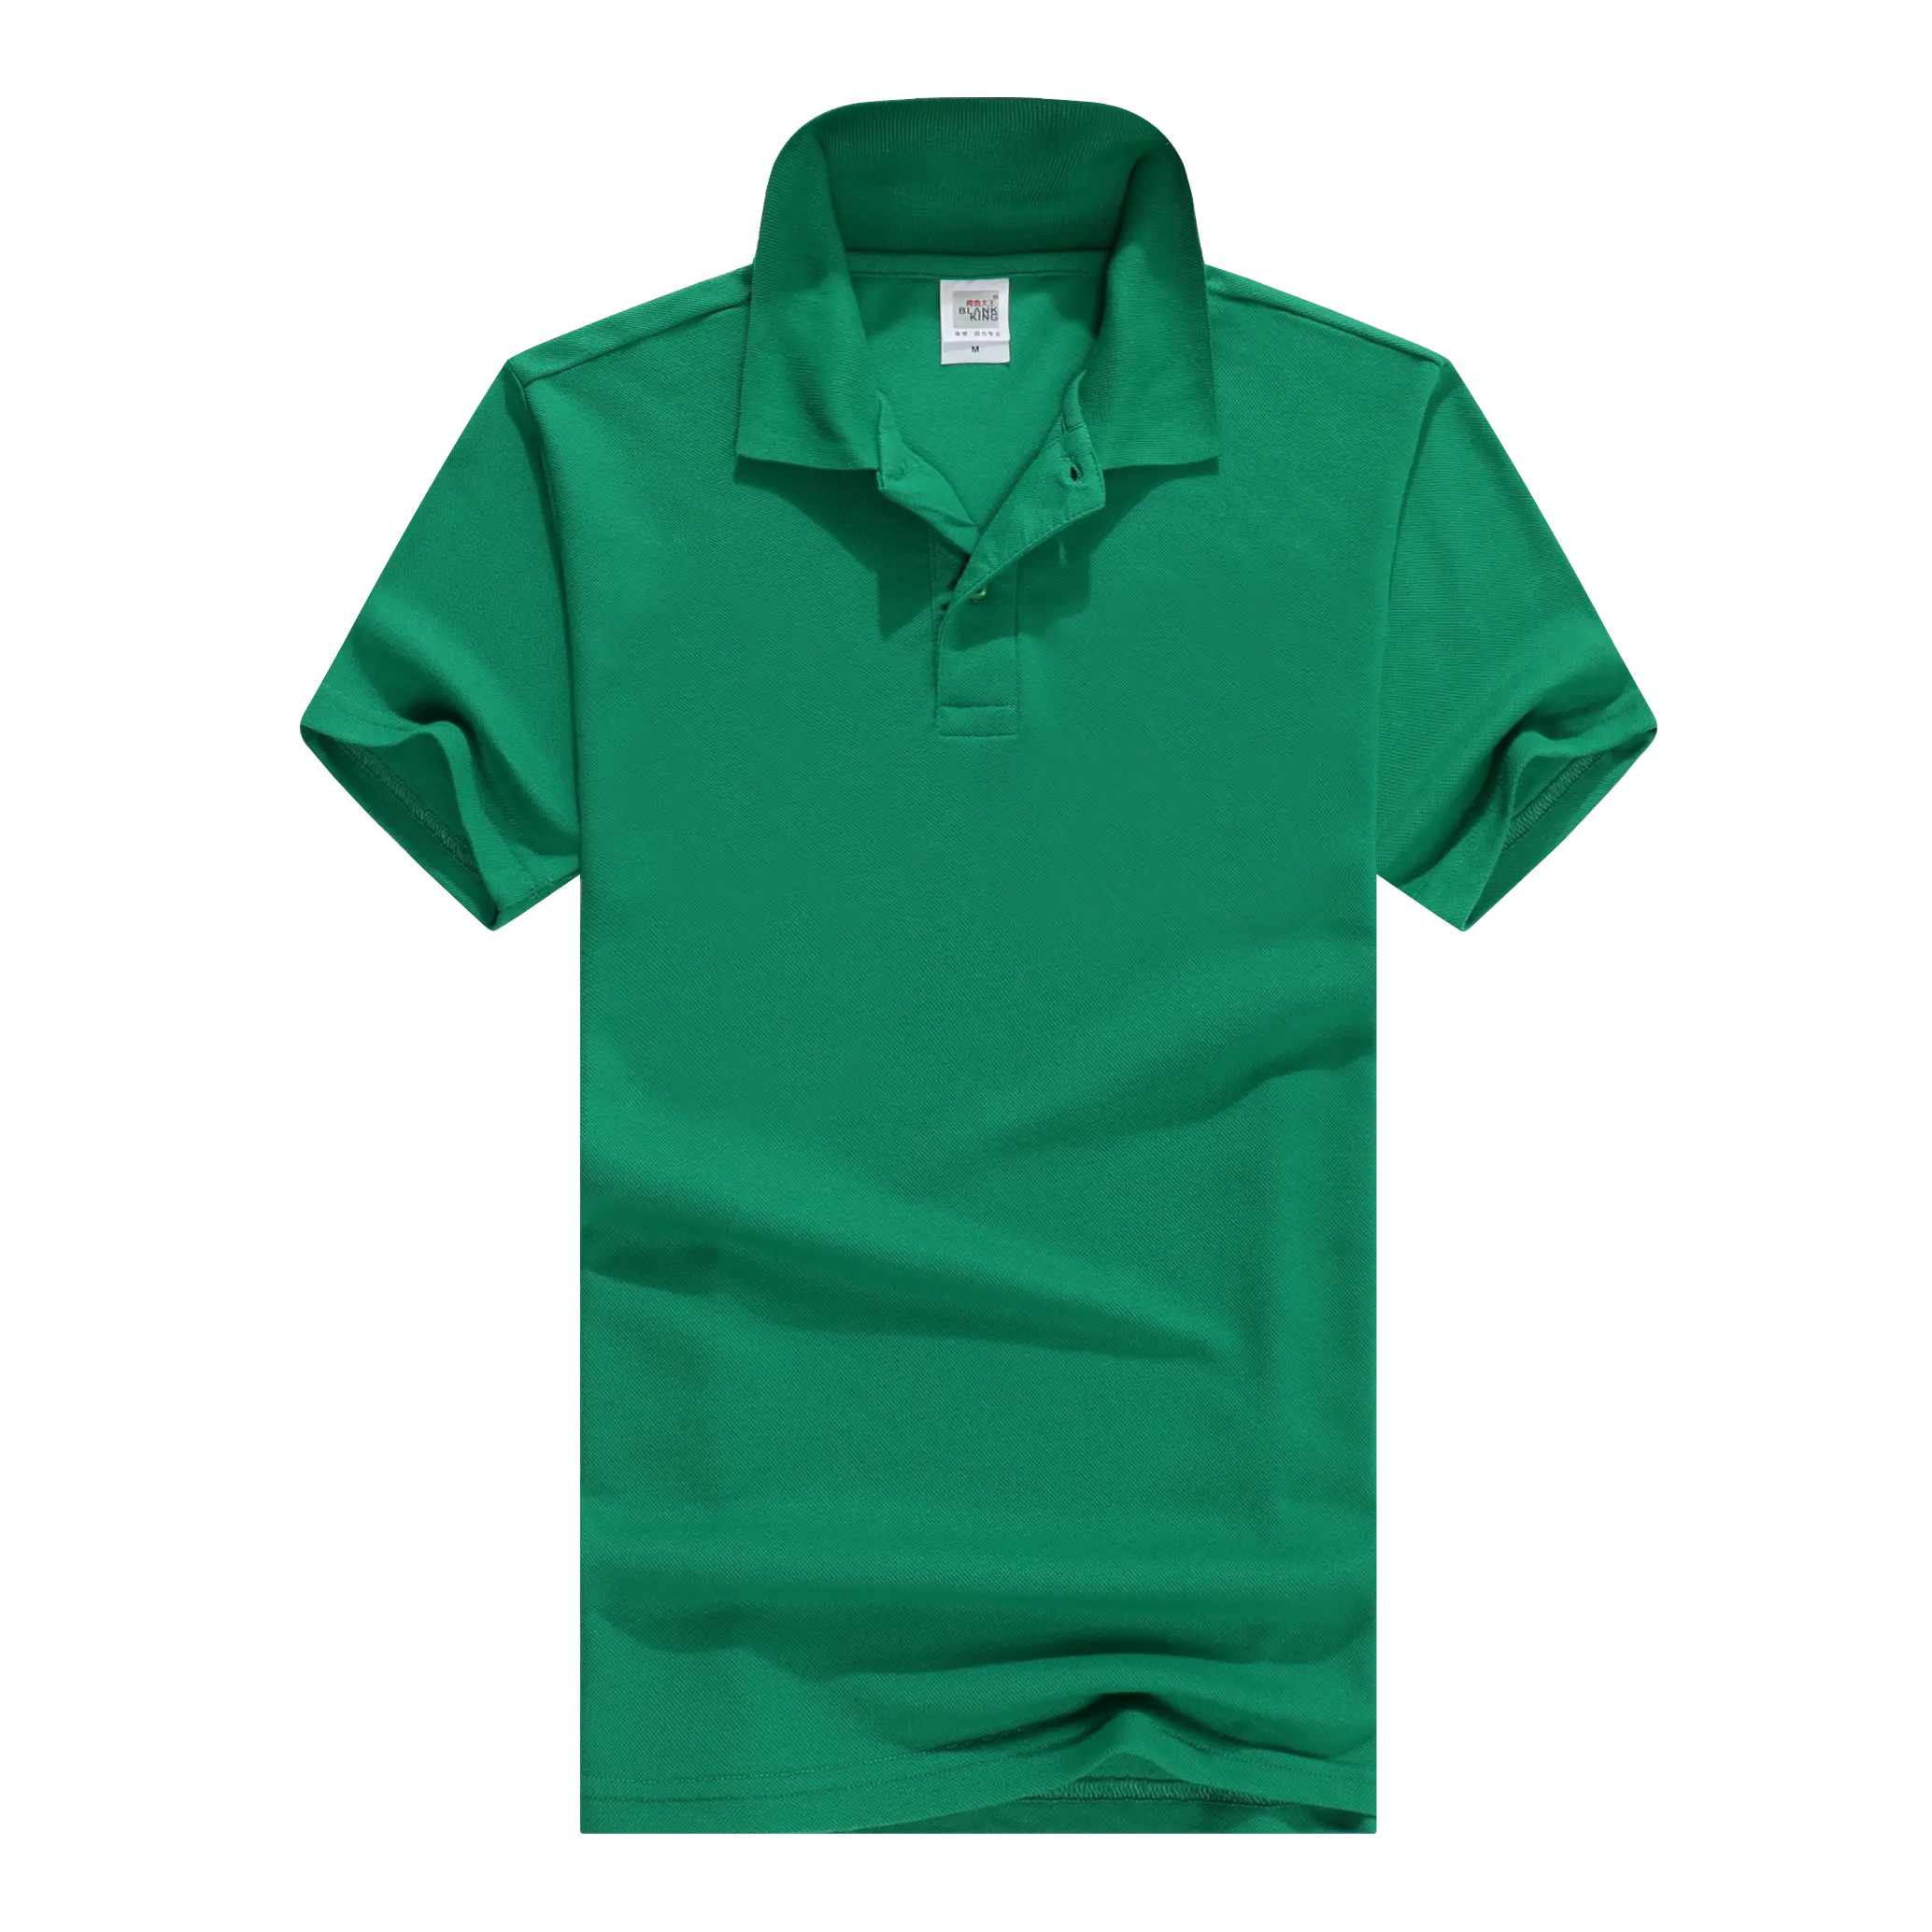 Gratis ontwerp diverse kleuren en maten pique uniform custom polo